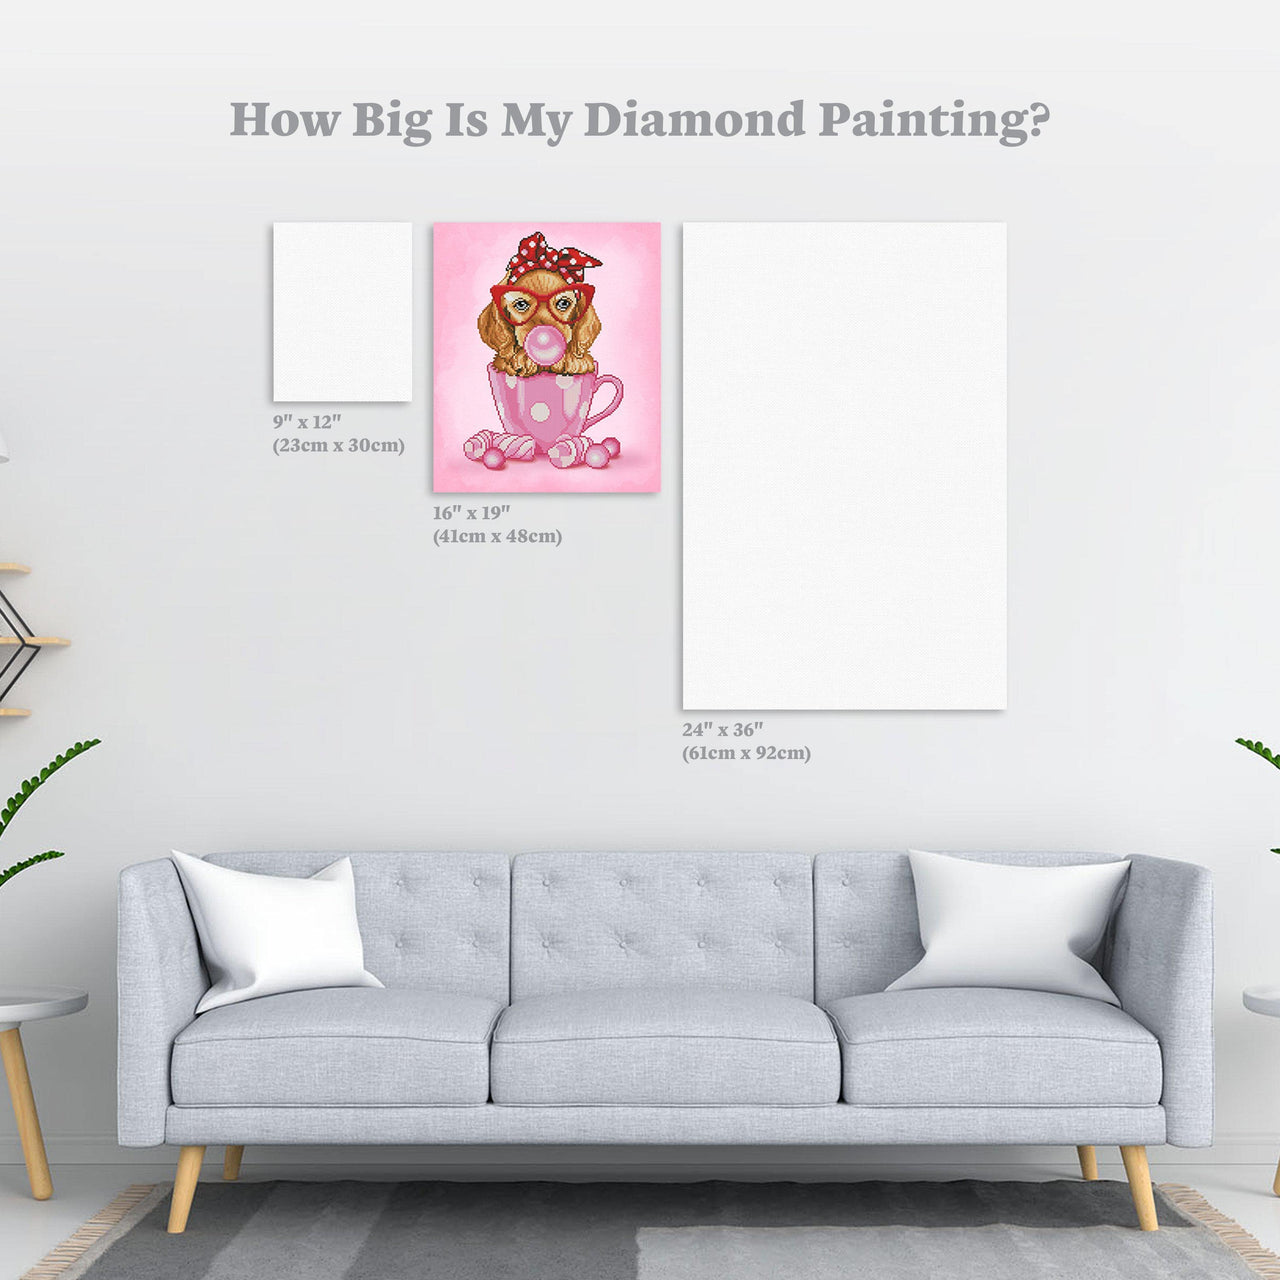 Diamond Painting Bubblegum Spaniel 16" x 19″ (41cm x 48cm) / Round with 27 Colors including 1 AB / 9,562